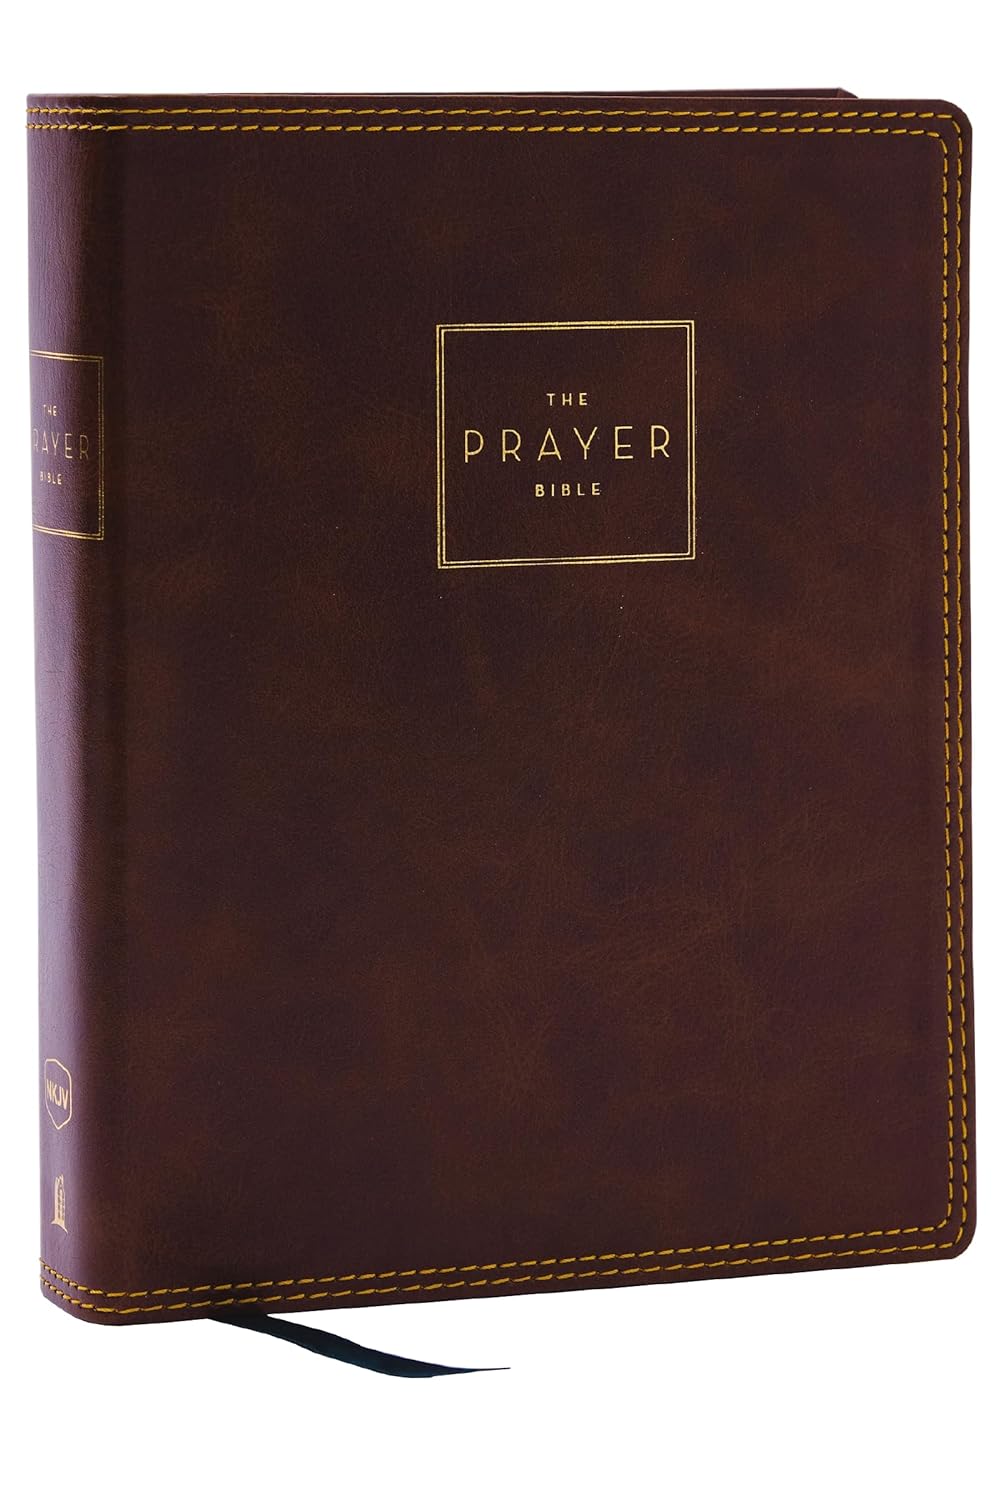 The Prayer Bible, NKJV